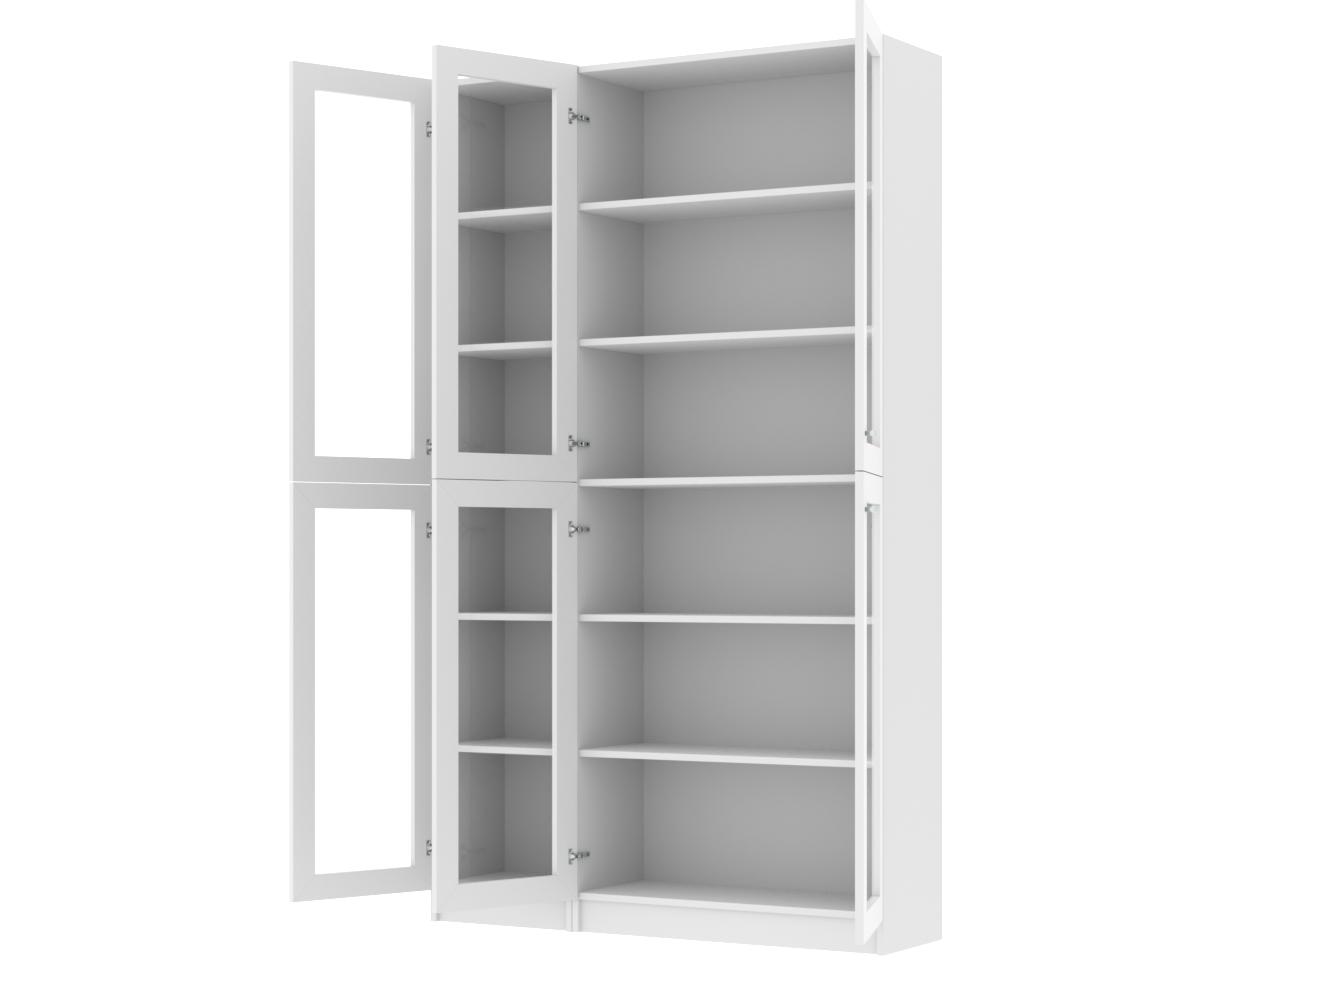  Книжный шкаф Билли 23 white ИКЕА (IKEA) изображение товара